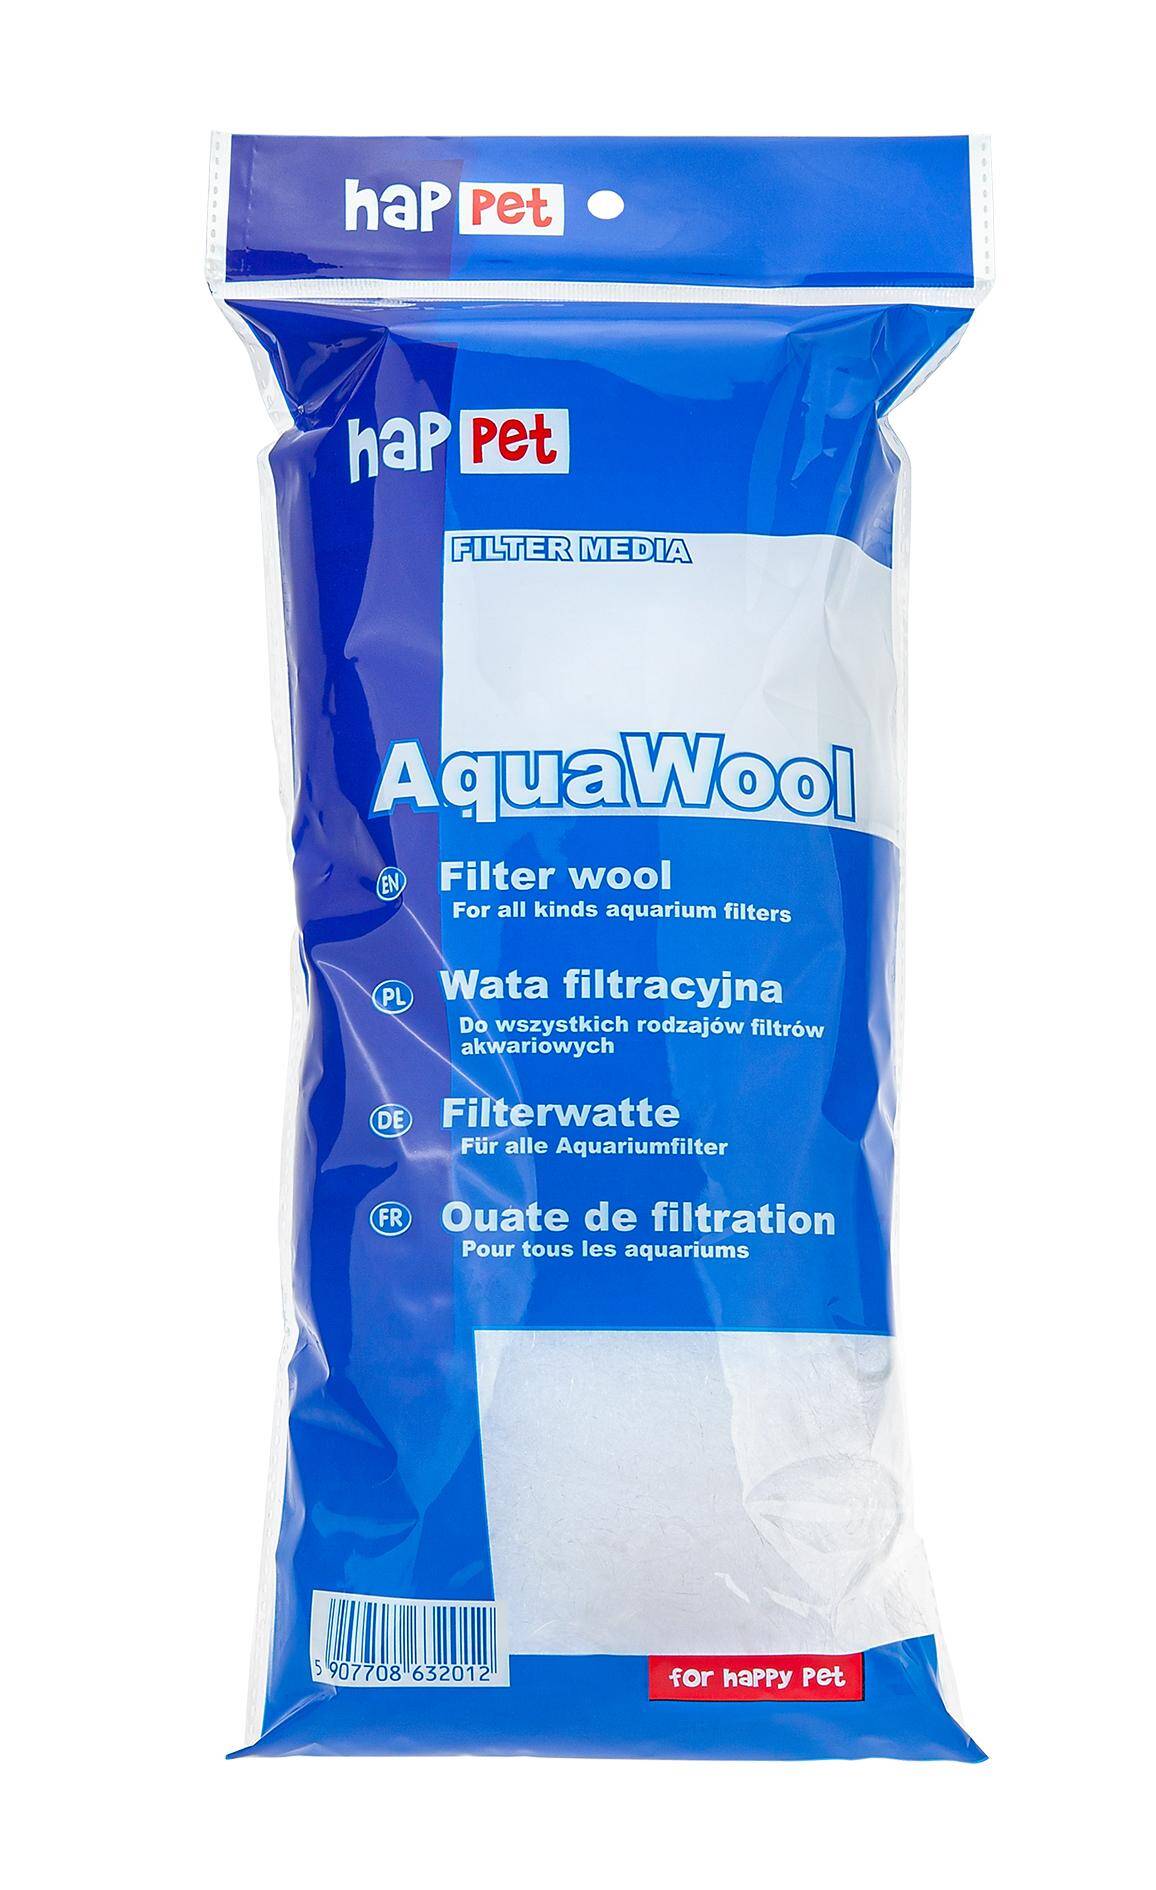 Aquawool wata filtracyjna wkład Happet